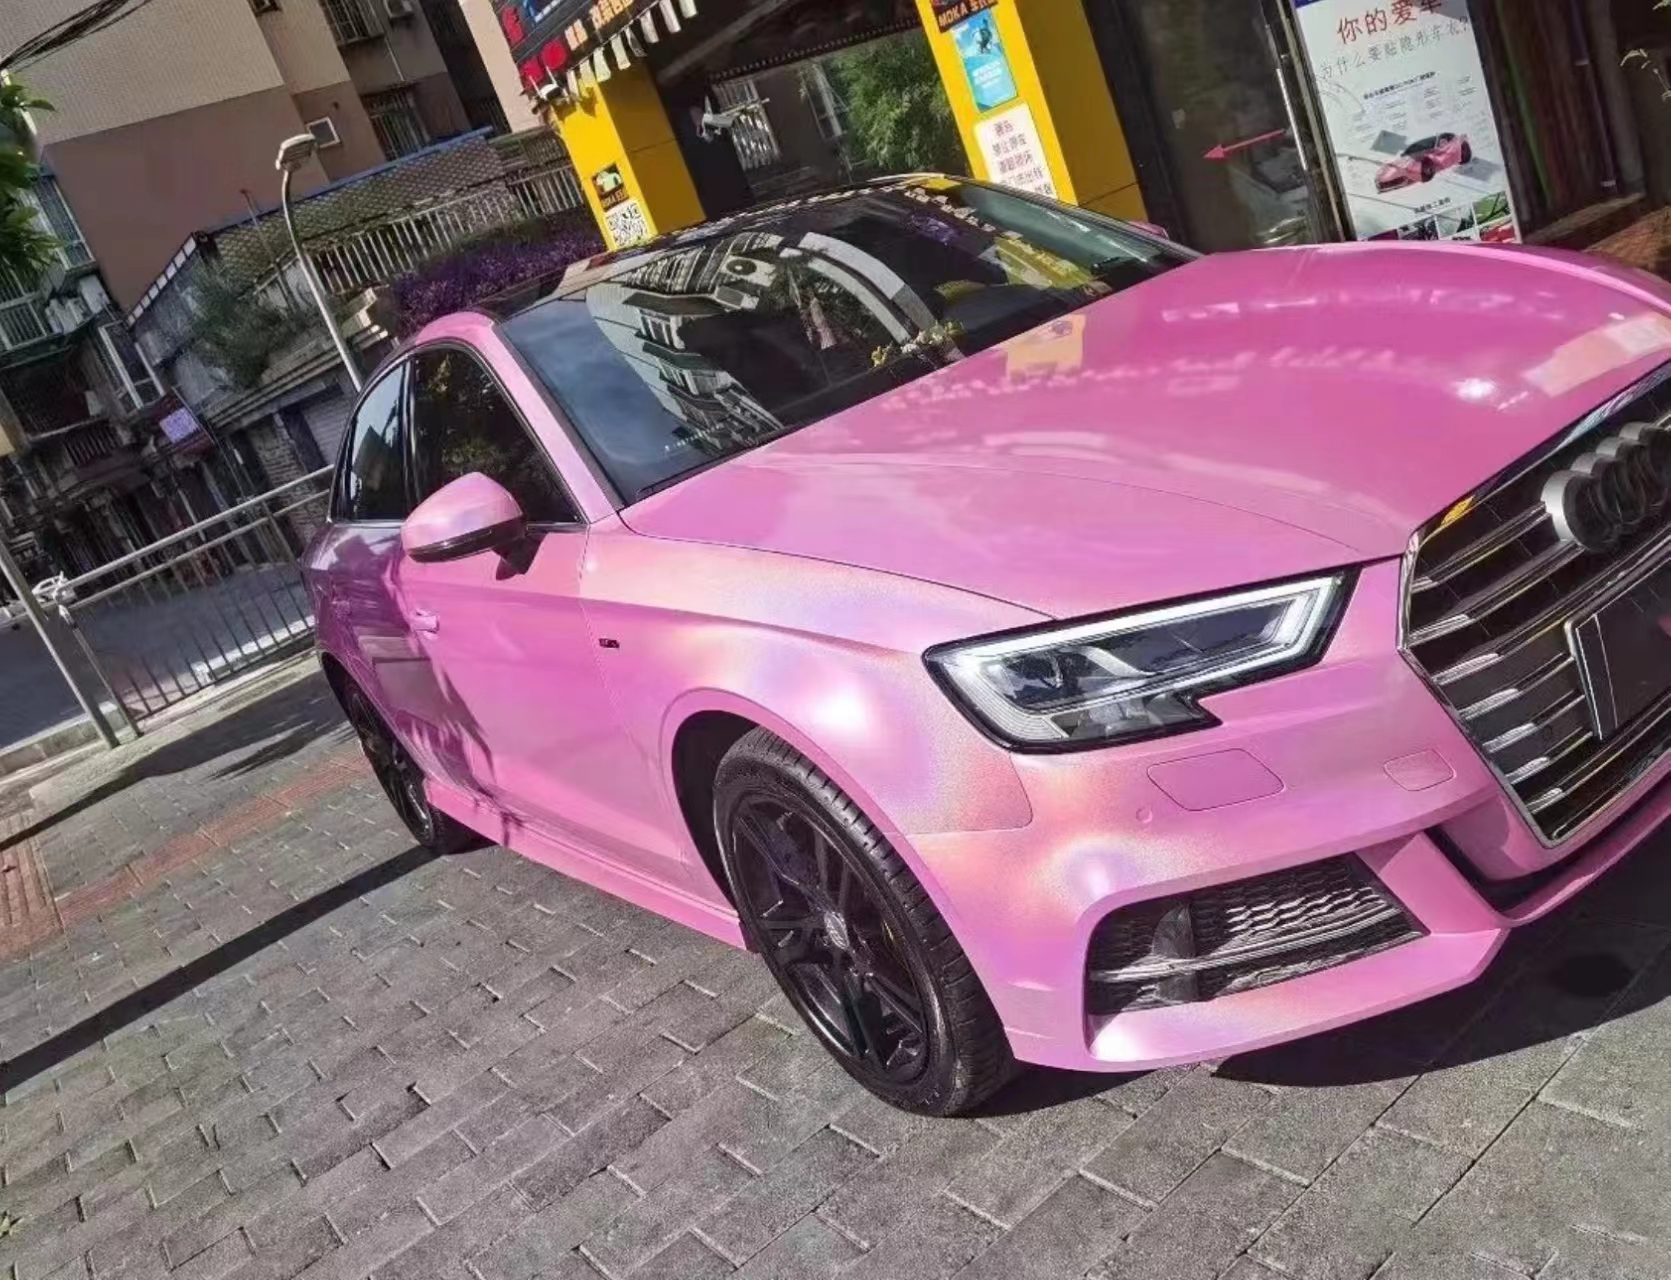 Vinilo de automóvil láser holográfico rosa mascota